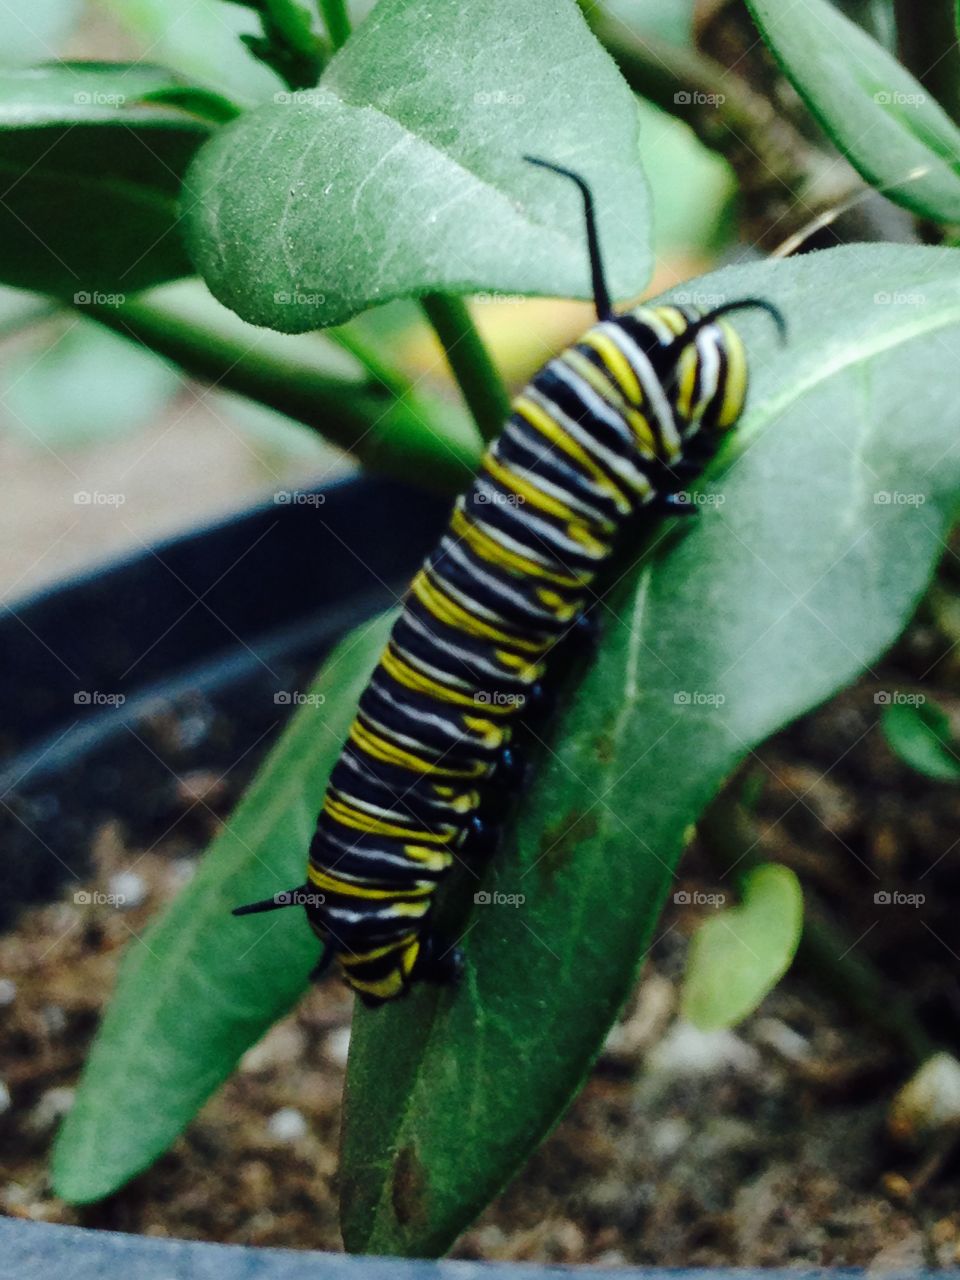 Caterpillar, garden, milkweed